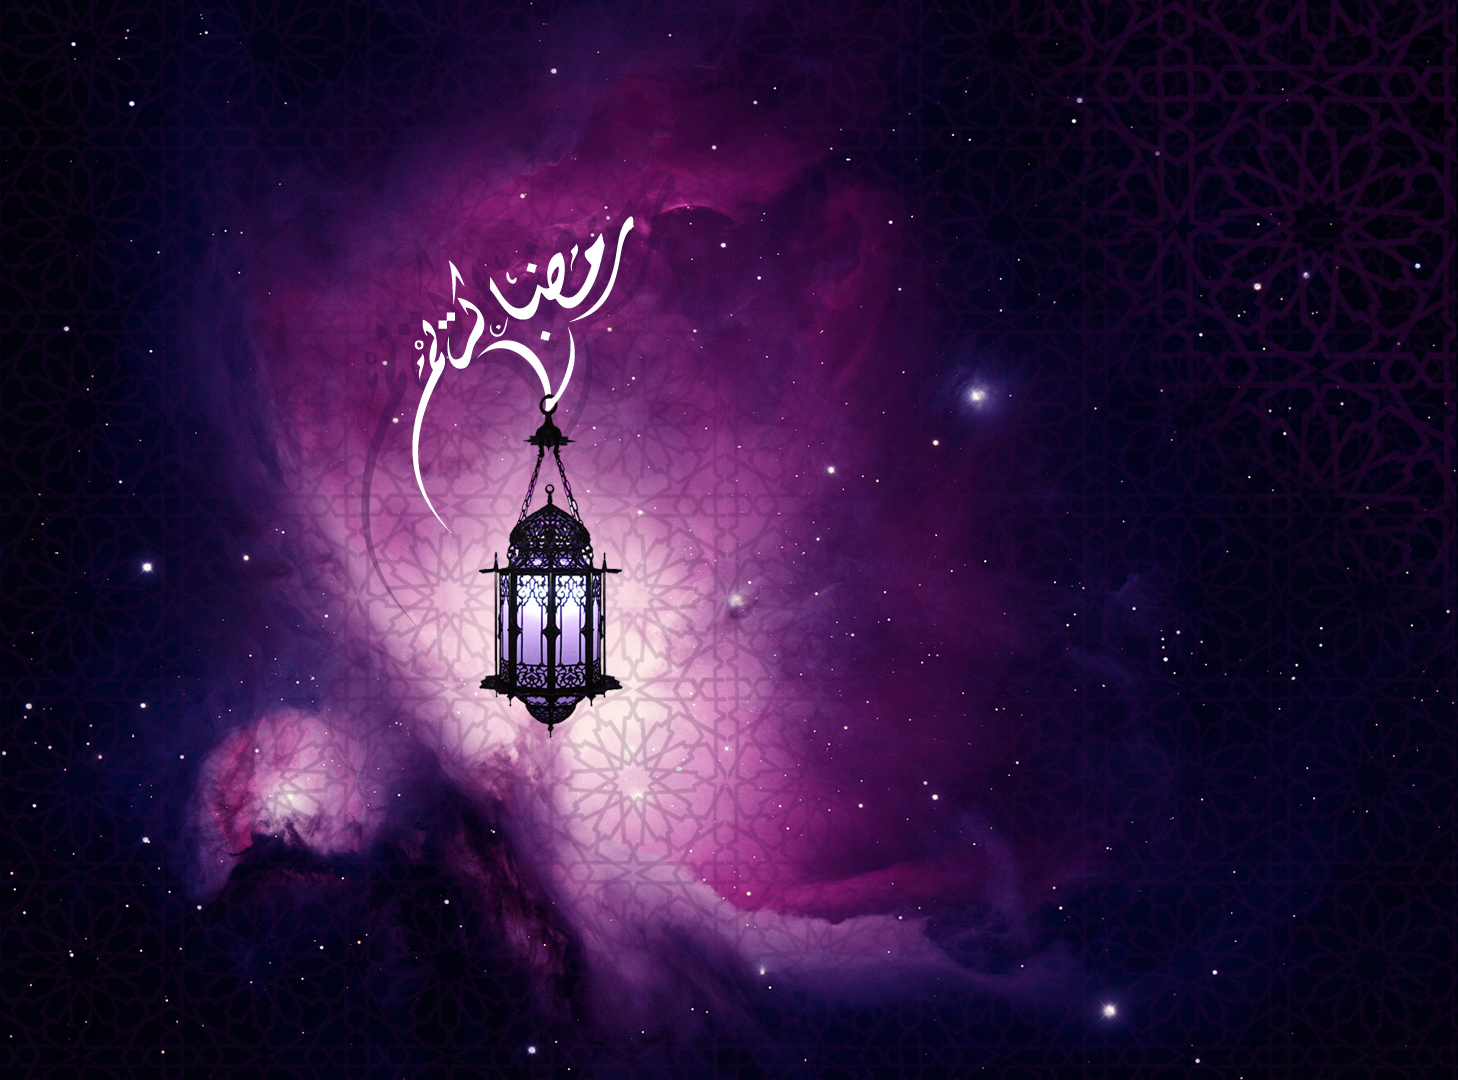 Ramadan Wallpapers 2013, 20 of the Best! - Top Islamic Blog!